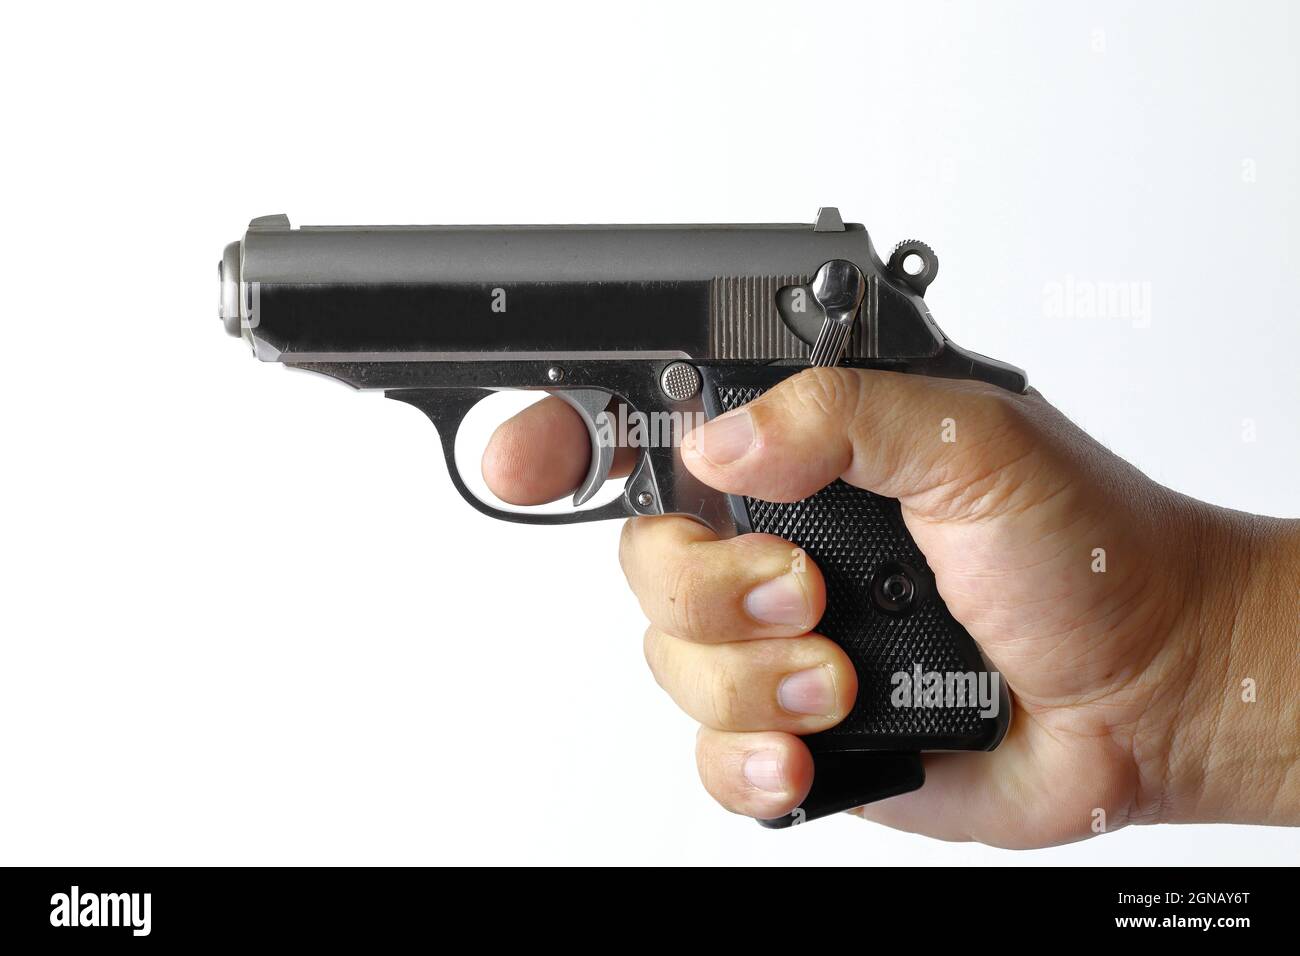 380 mm hand gun stock photo. Image of agency, classic - 51394710